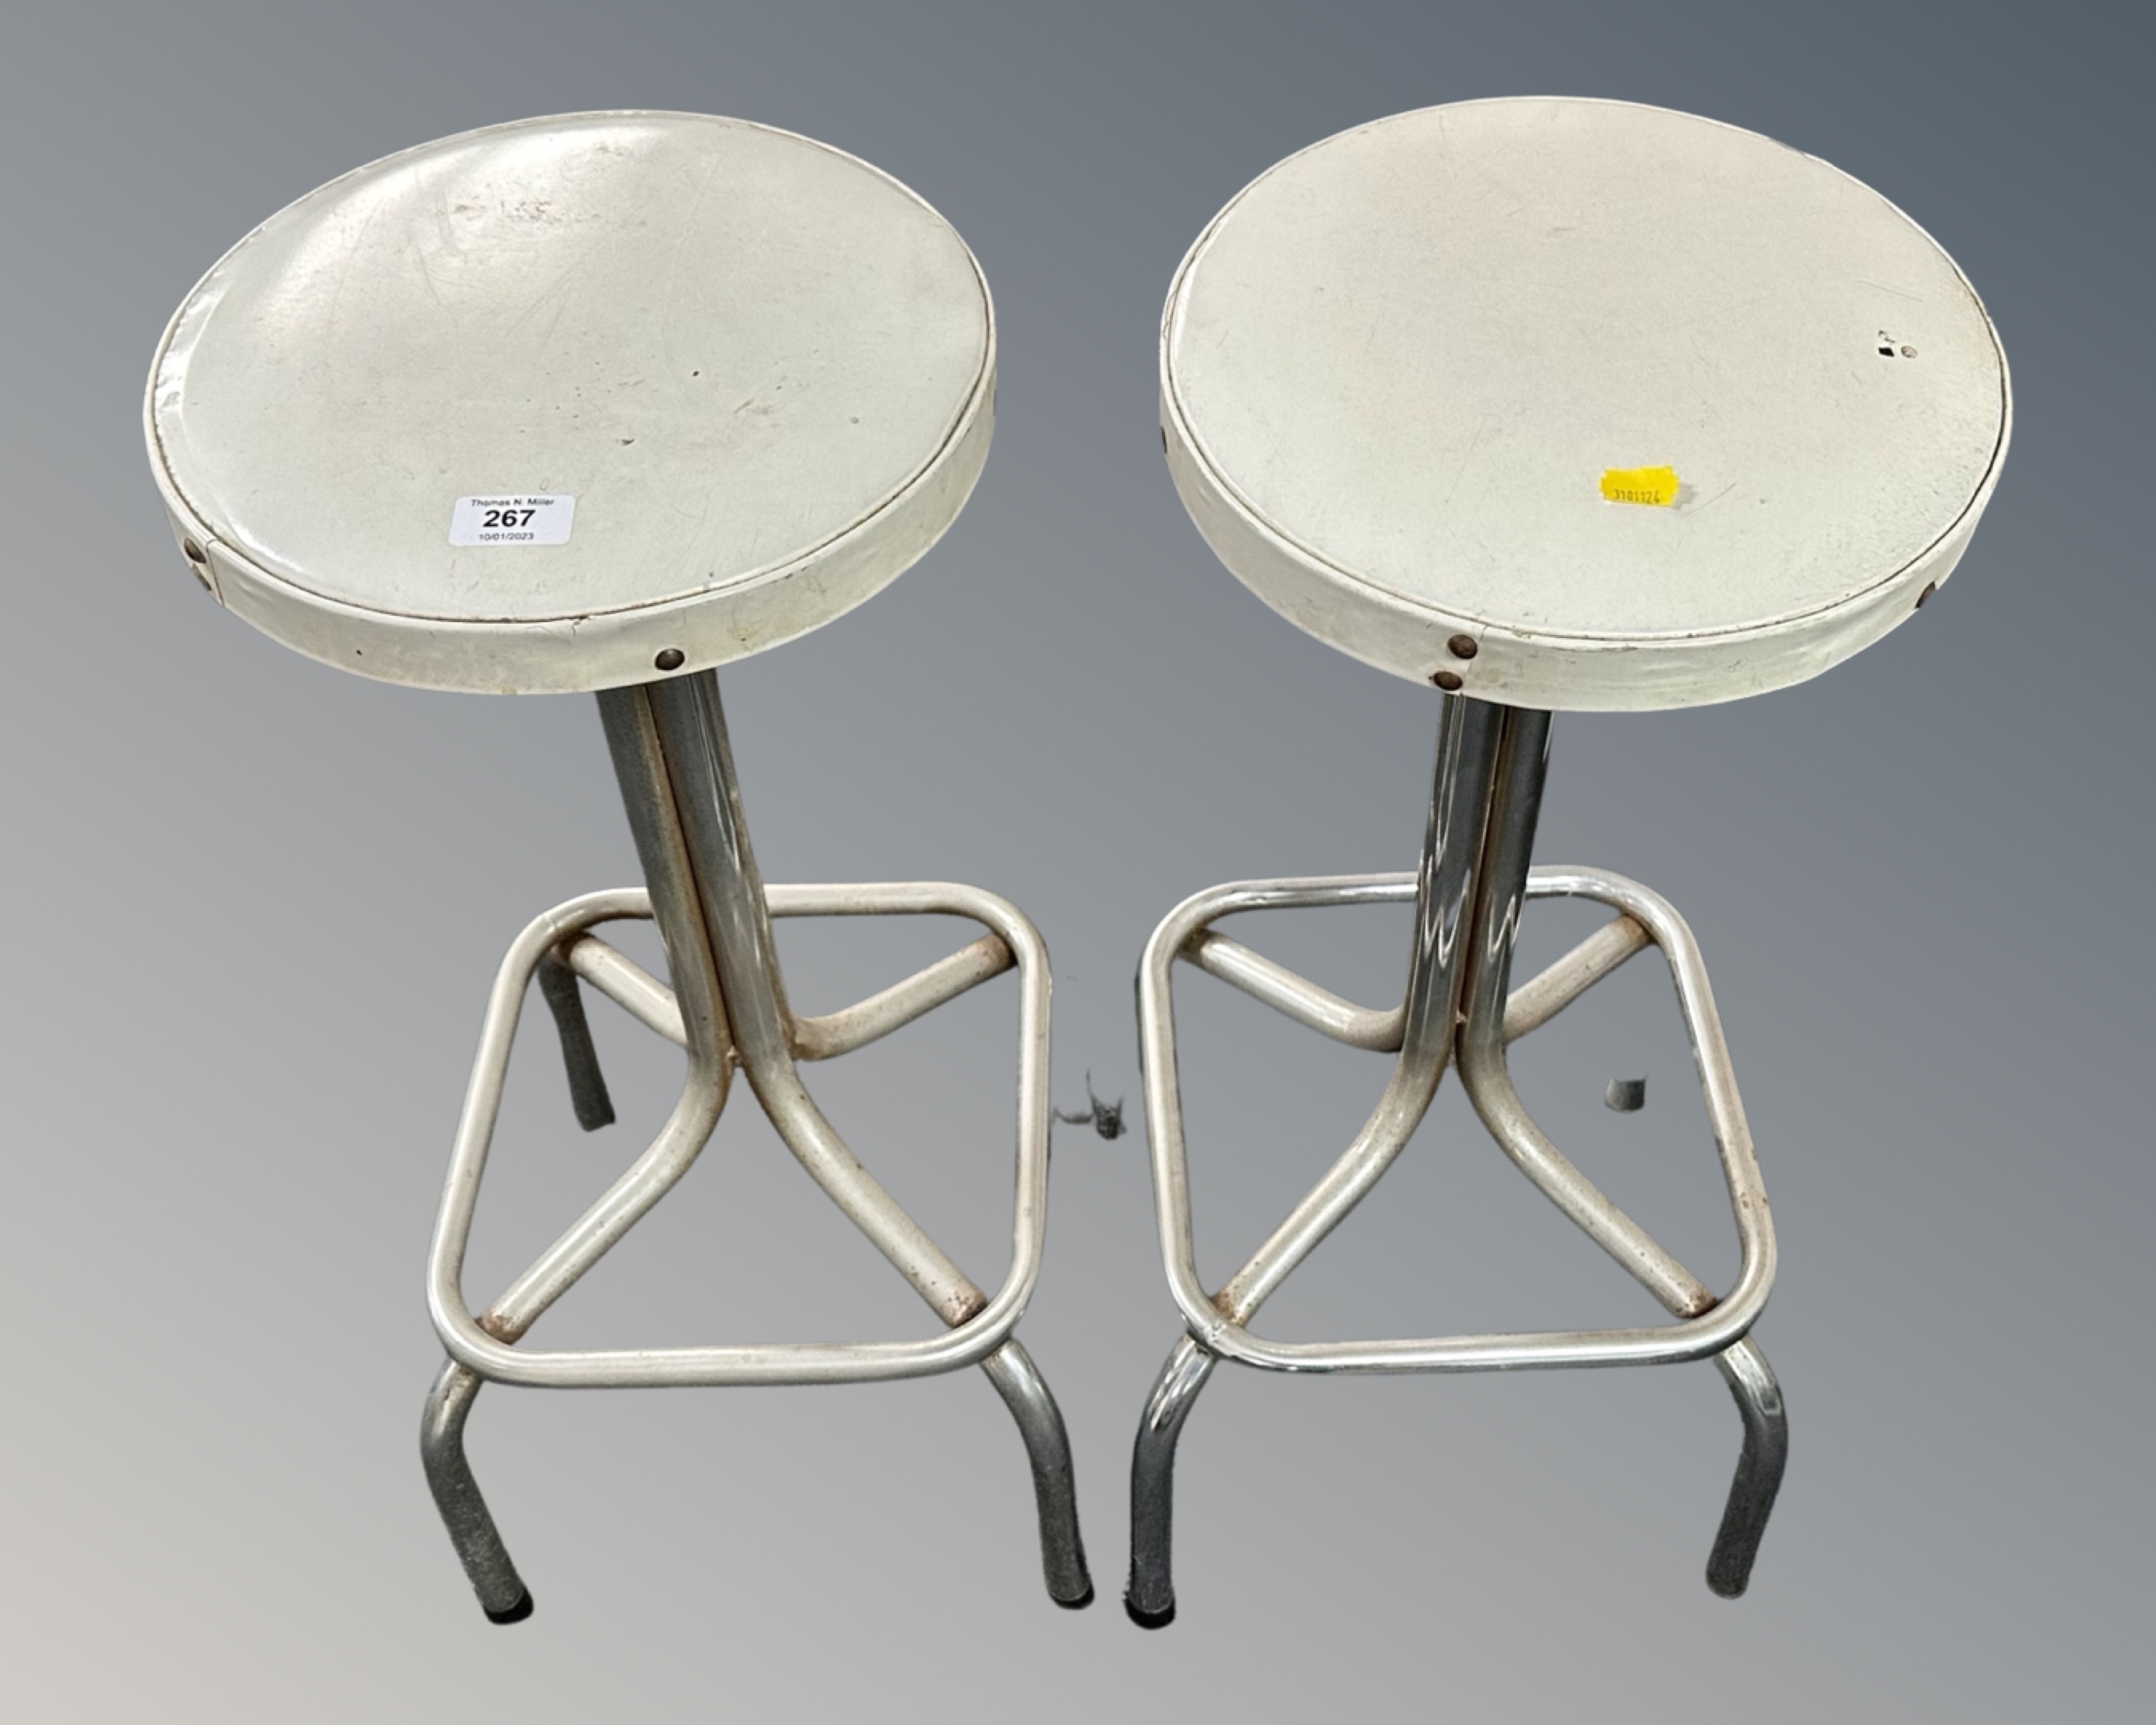 A pair of 1970s chrome tubular metal bar stools with white vinyl seats.